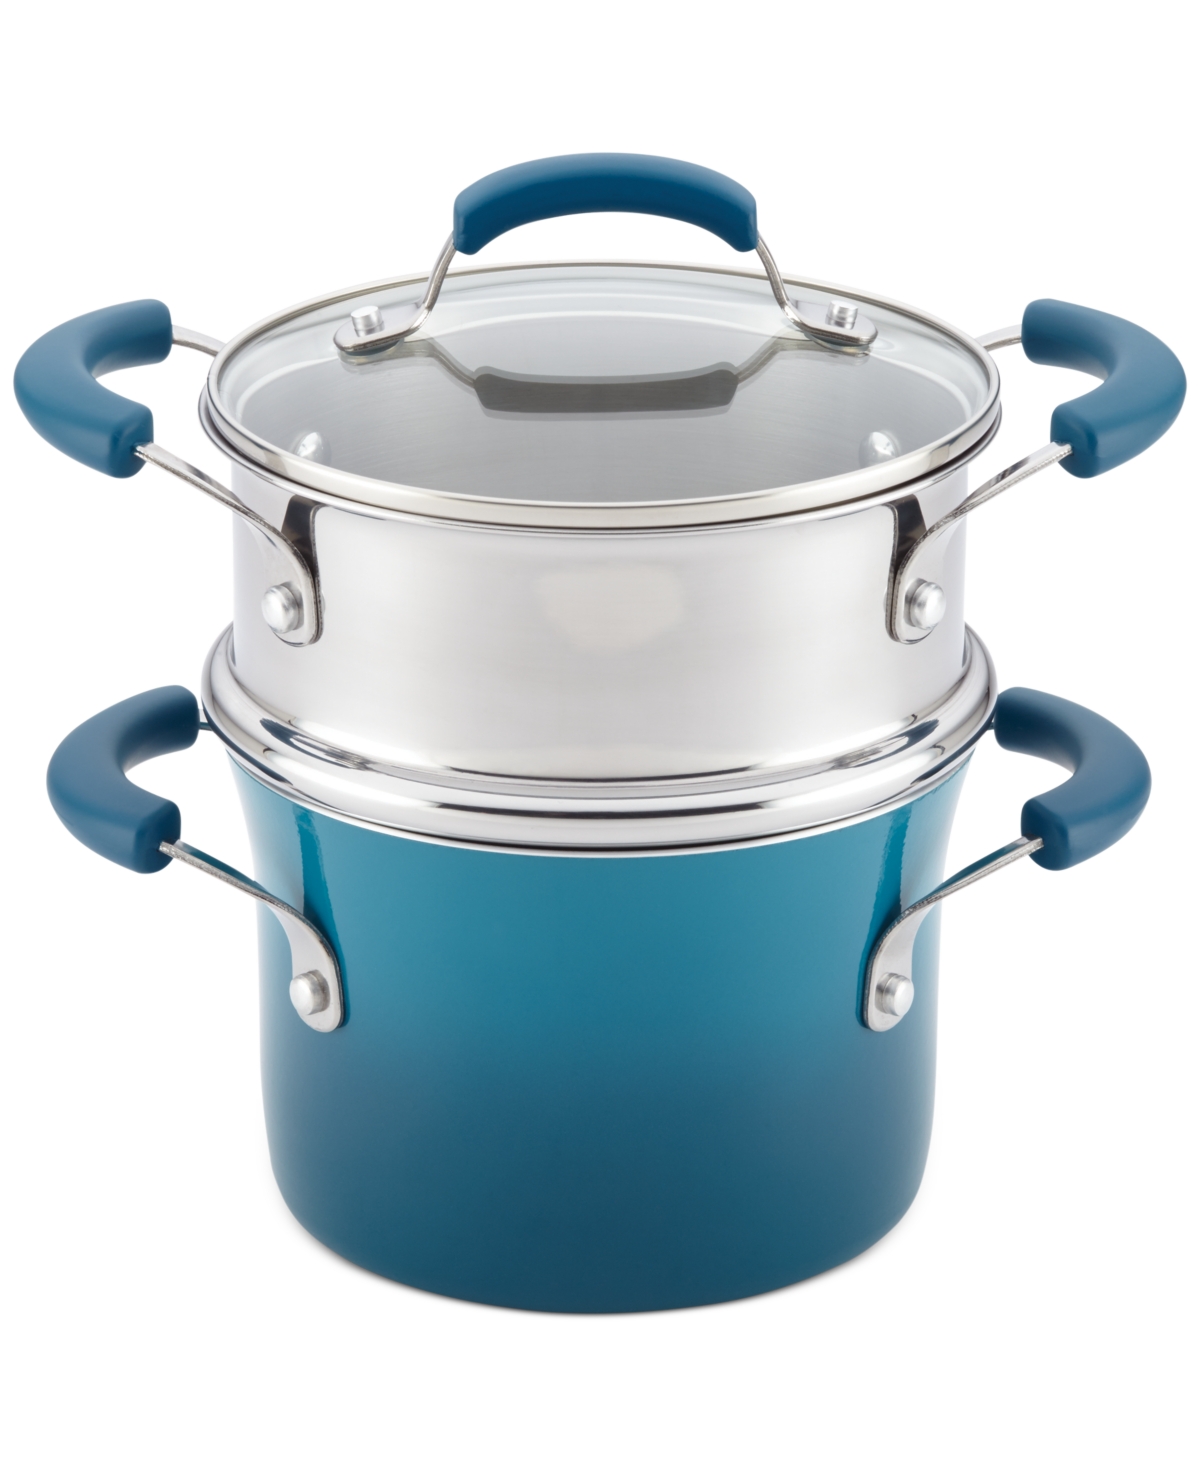 Rachael Ray Cucina Hard Enamel Nonstick Sauce Pot And Steamer Insert Set, 3-quart, Agave Blue In Marine Blue